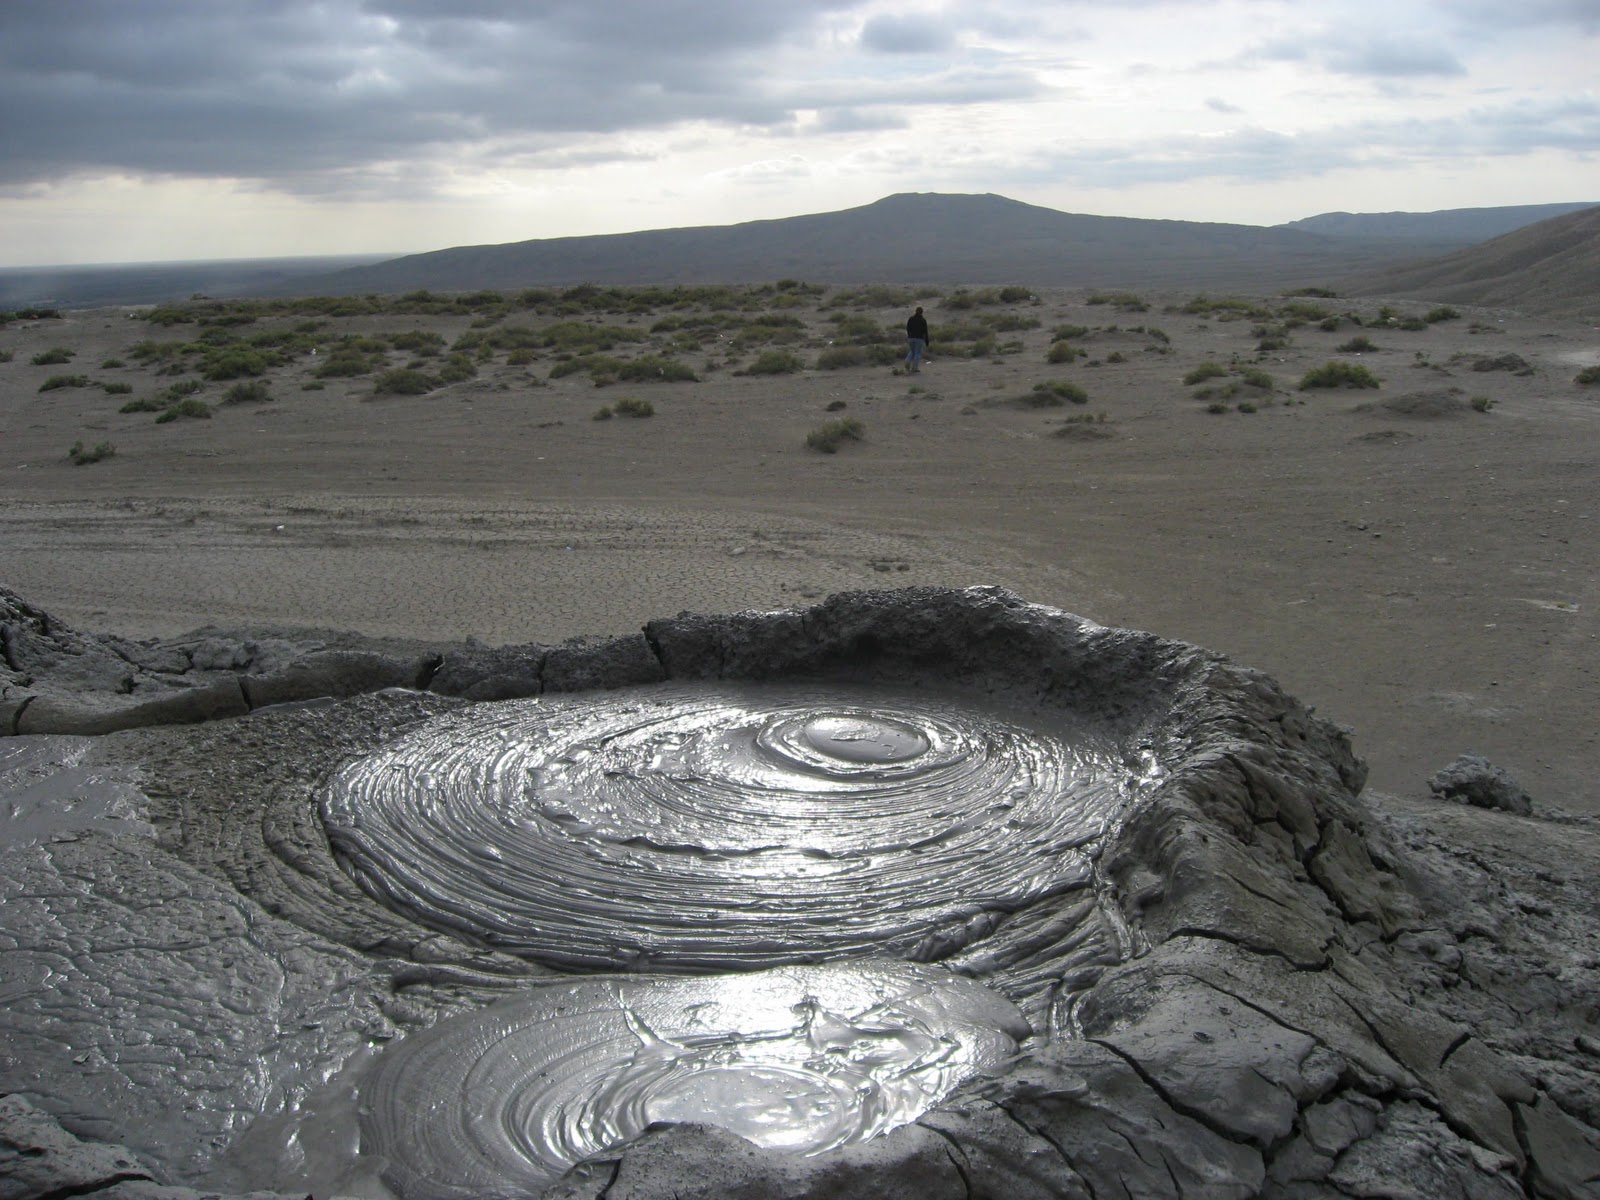 Italian scientists study Azerbaijan's mud volcanoes